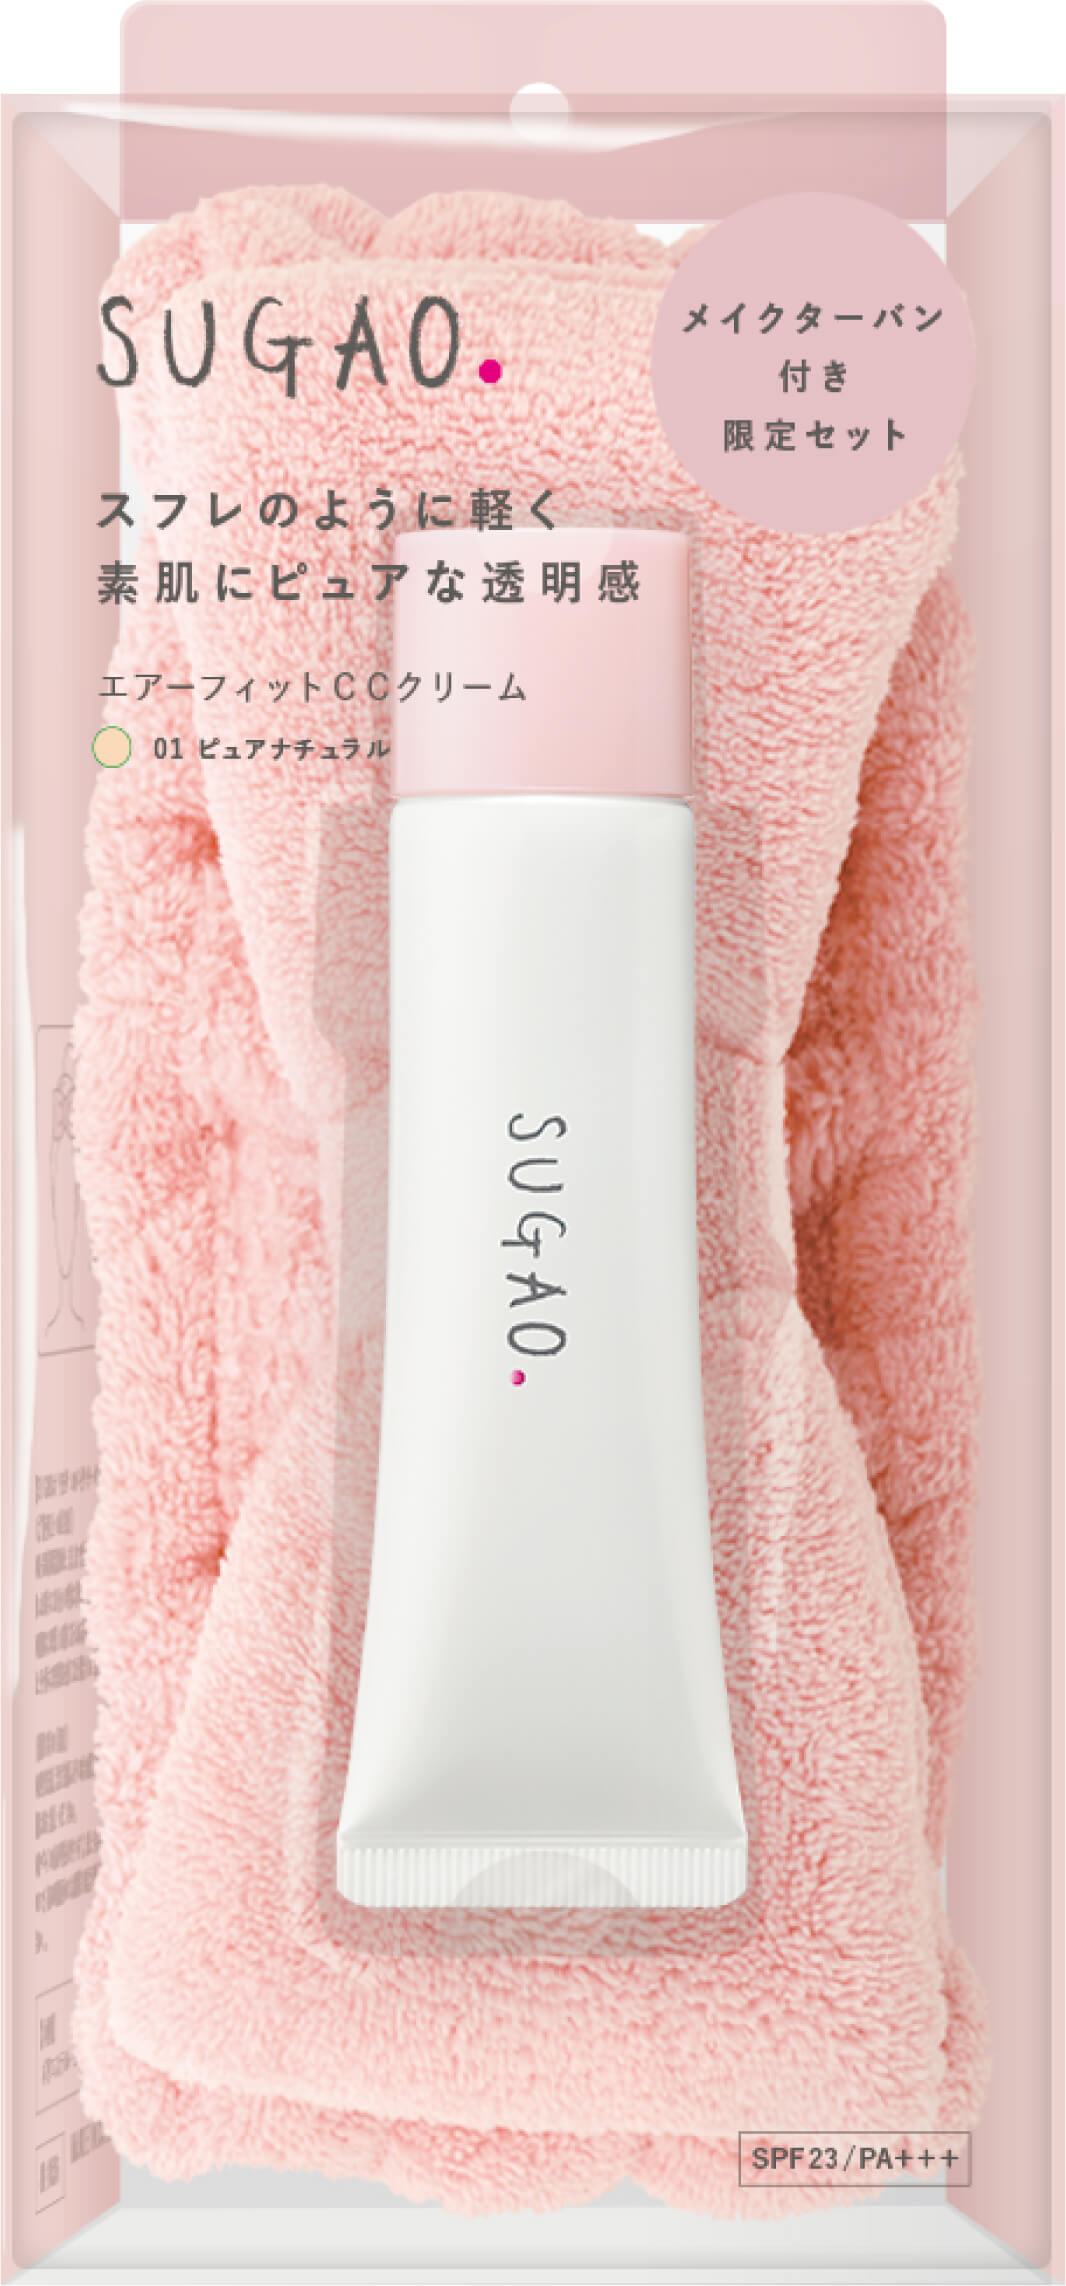 SUGAO® エアー フィットCCクリーム CC cream